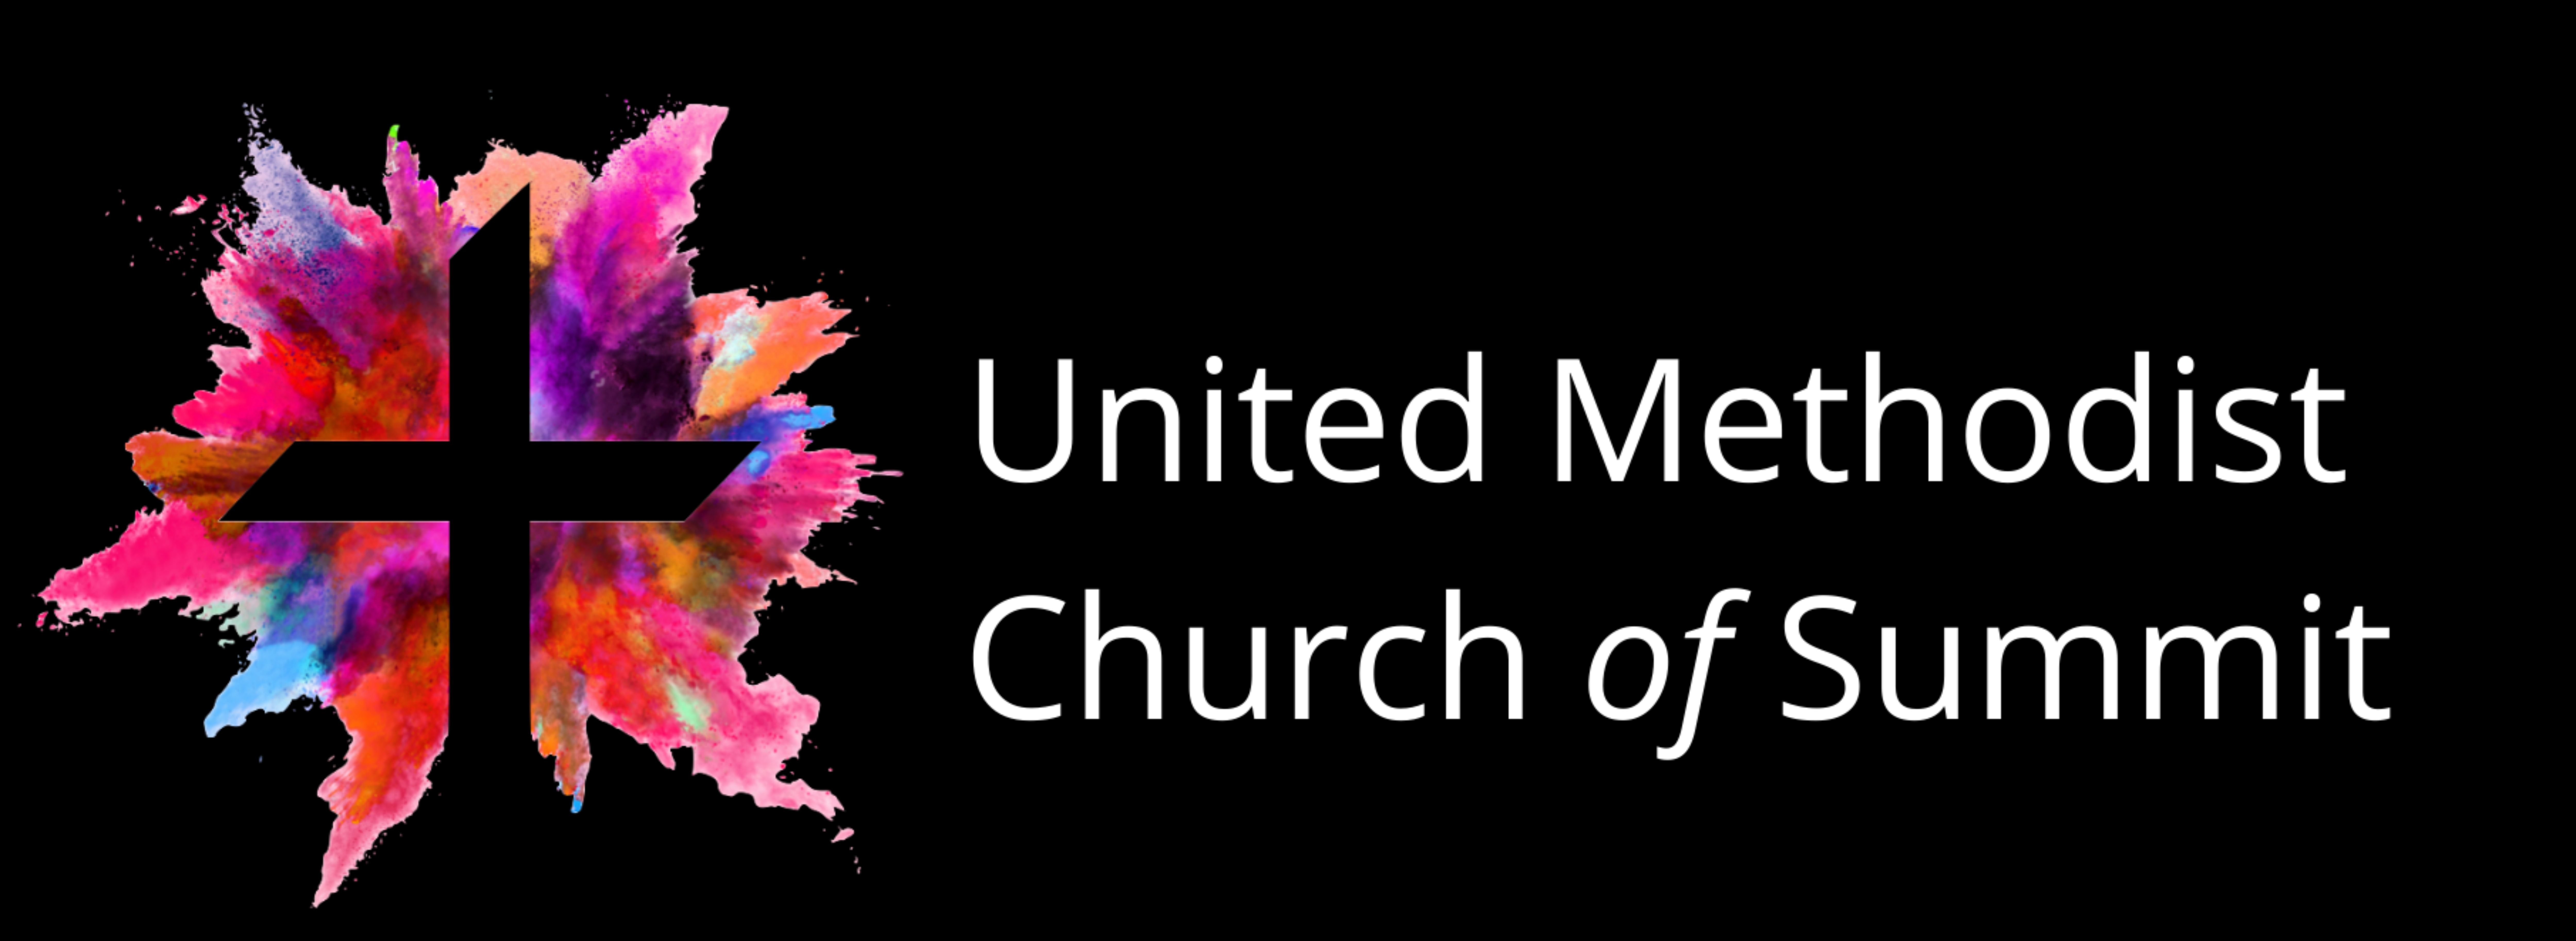 United Methodist Church of Summit